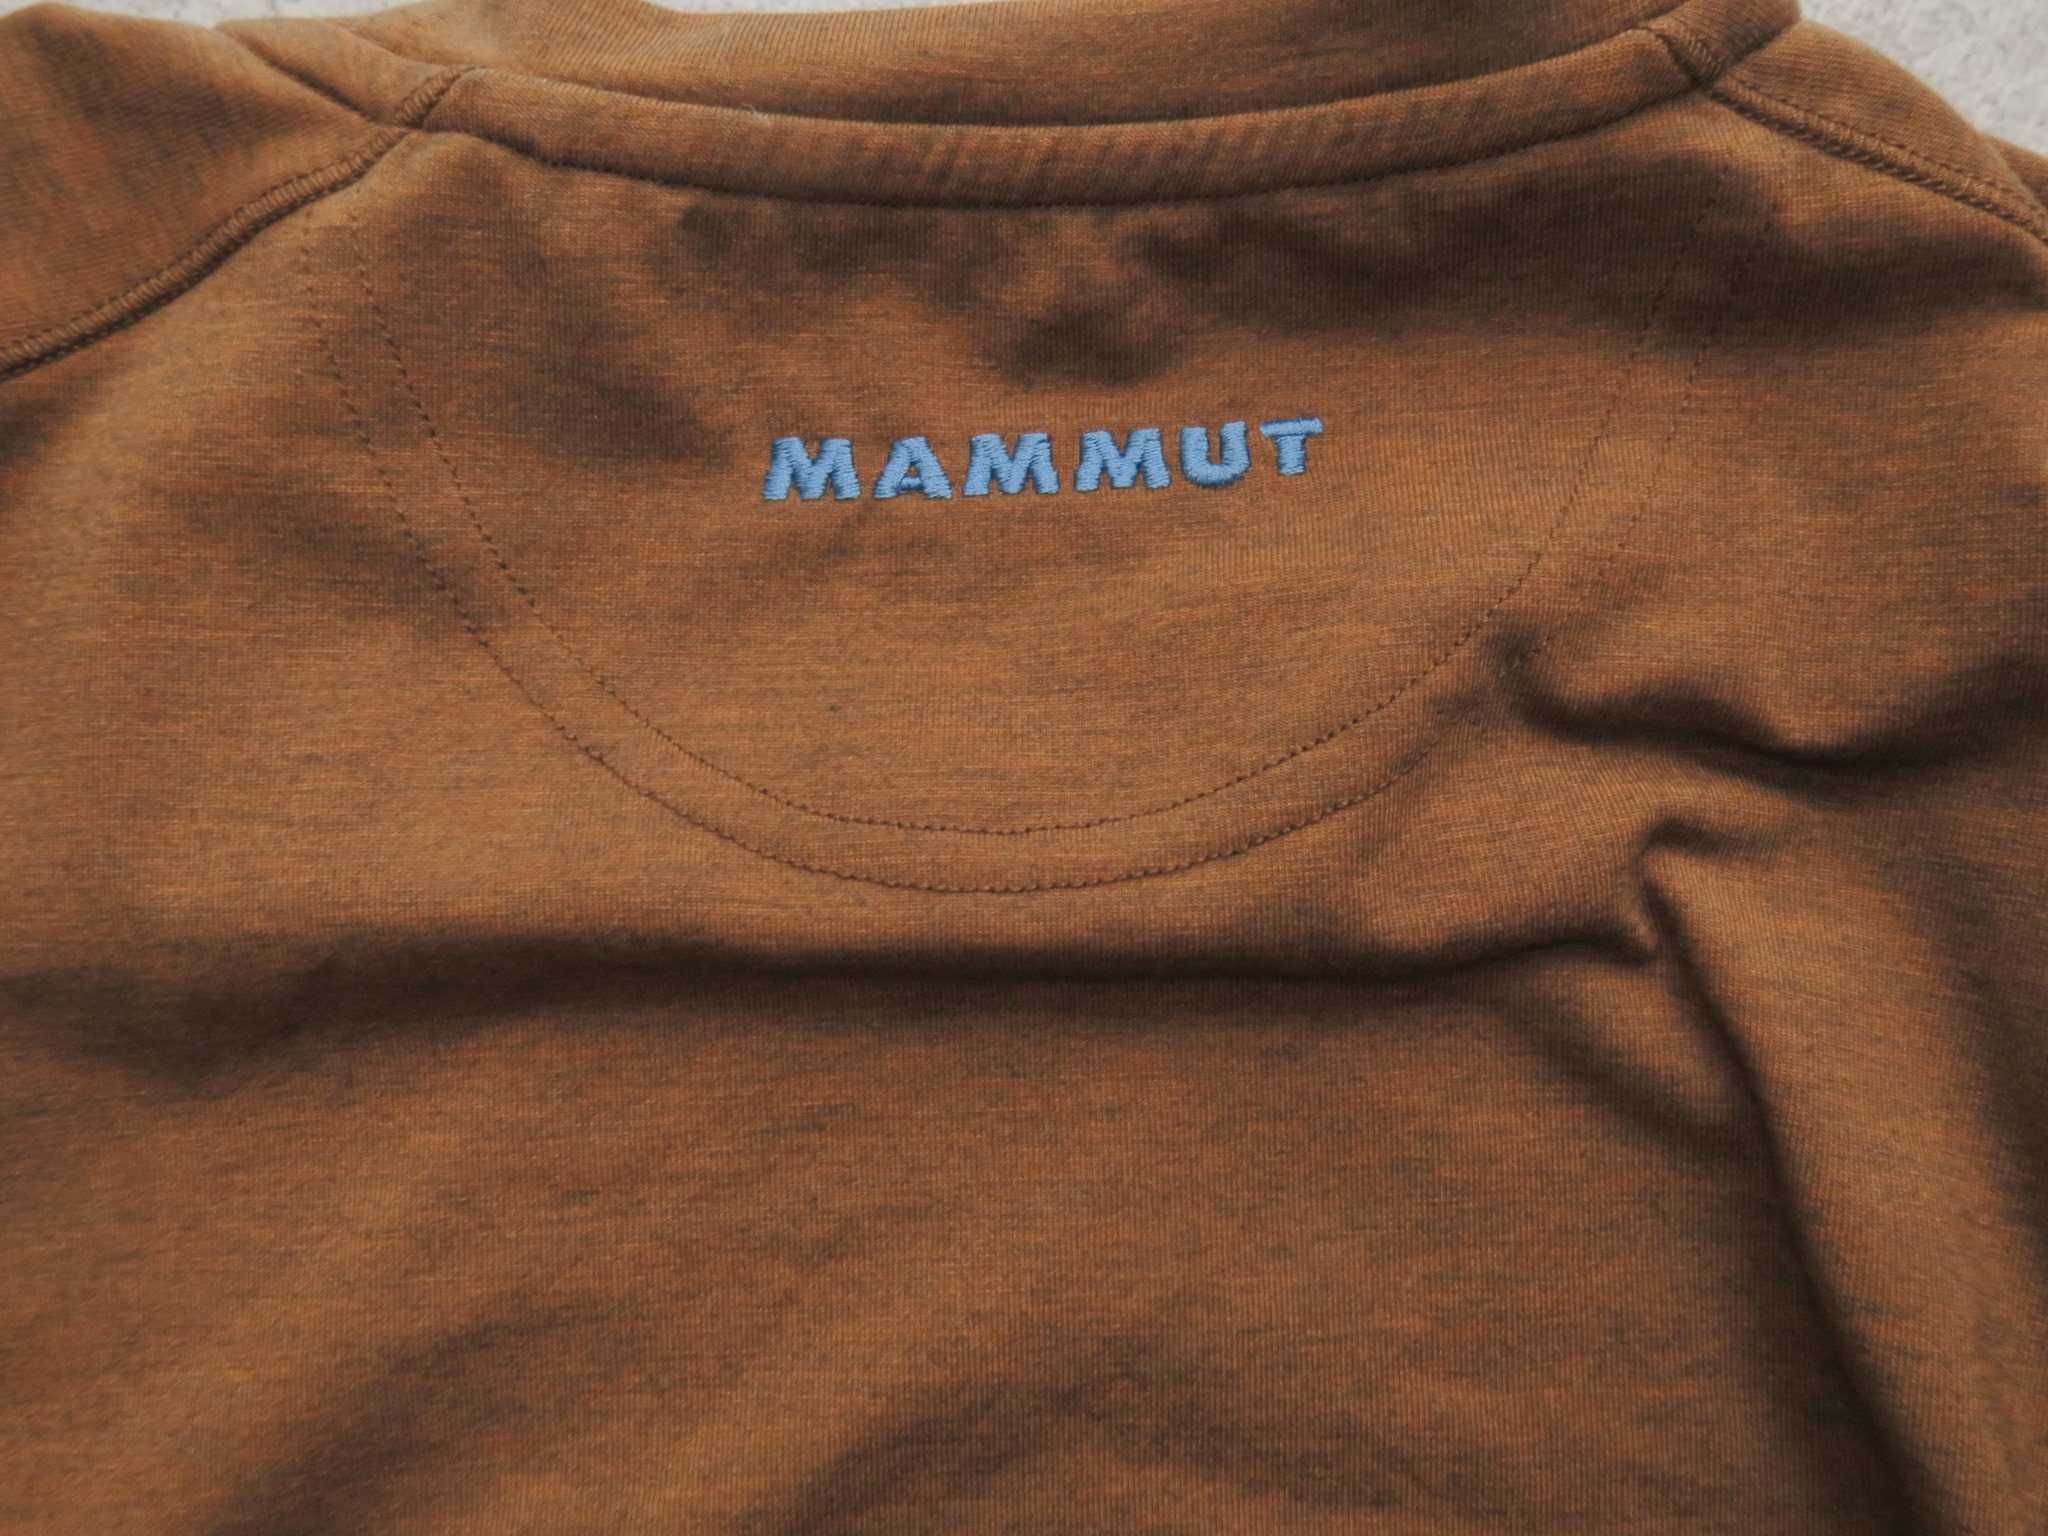 Mammut koszulka z duzym logo t-shirt L